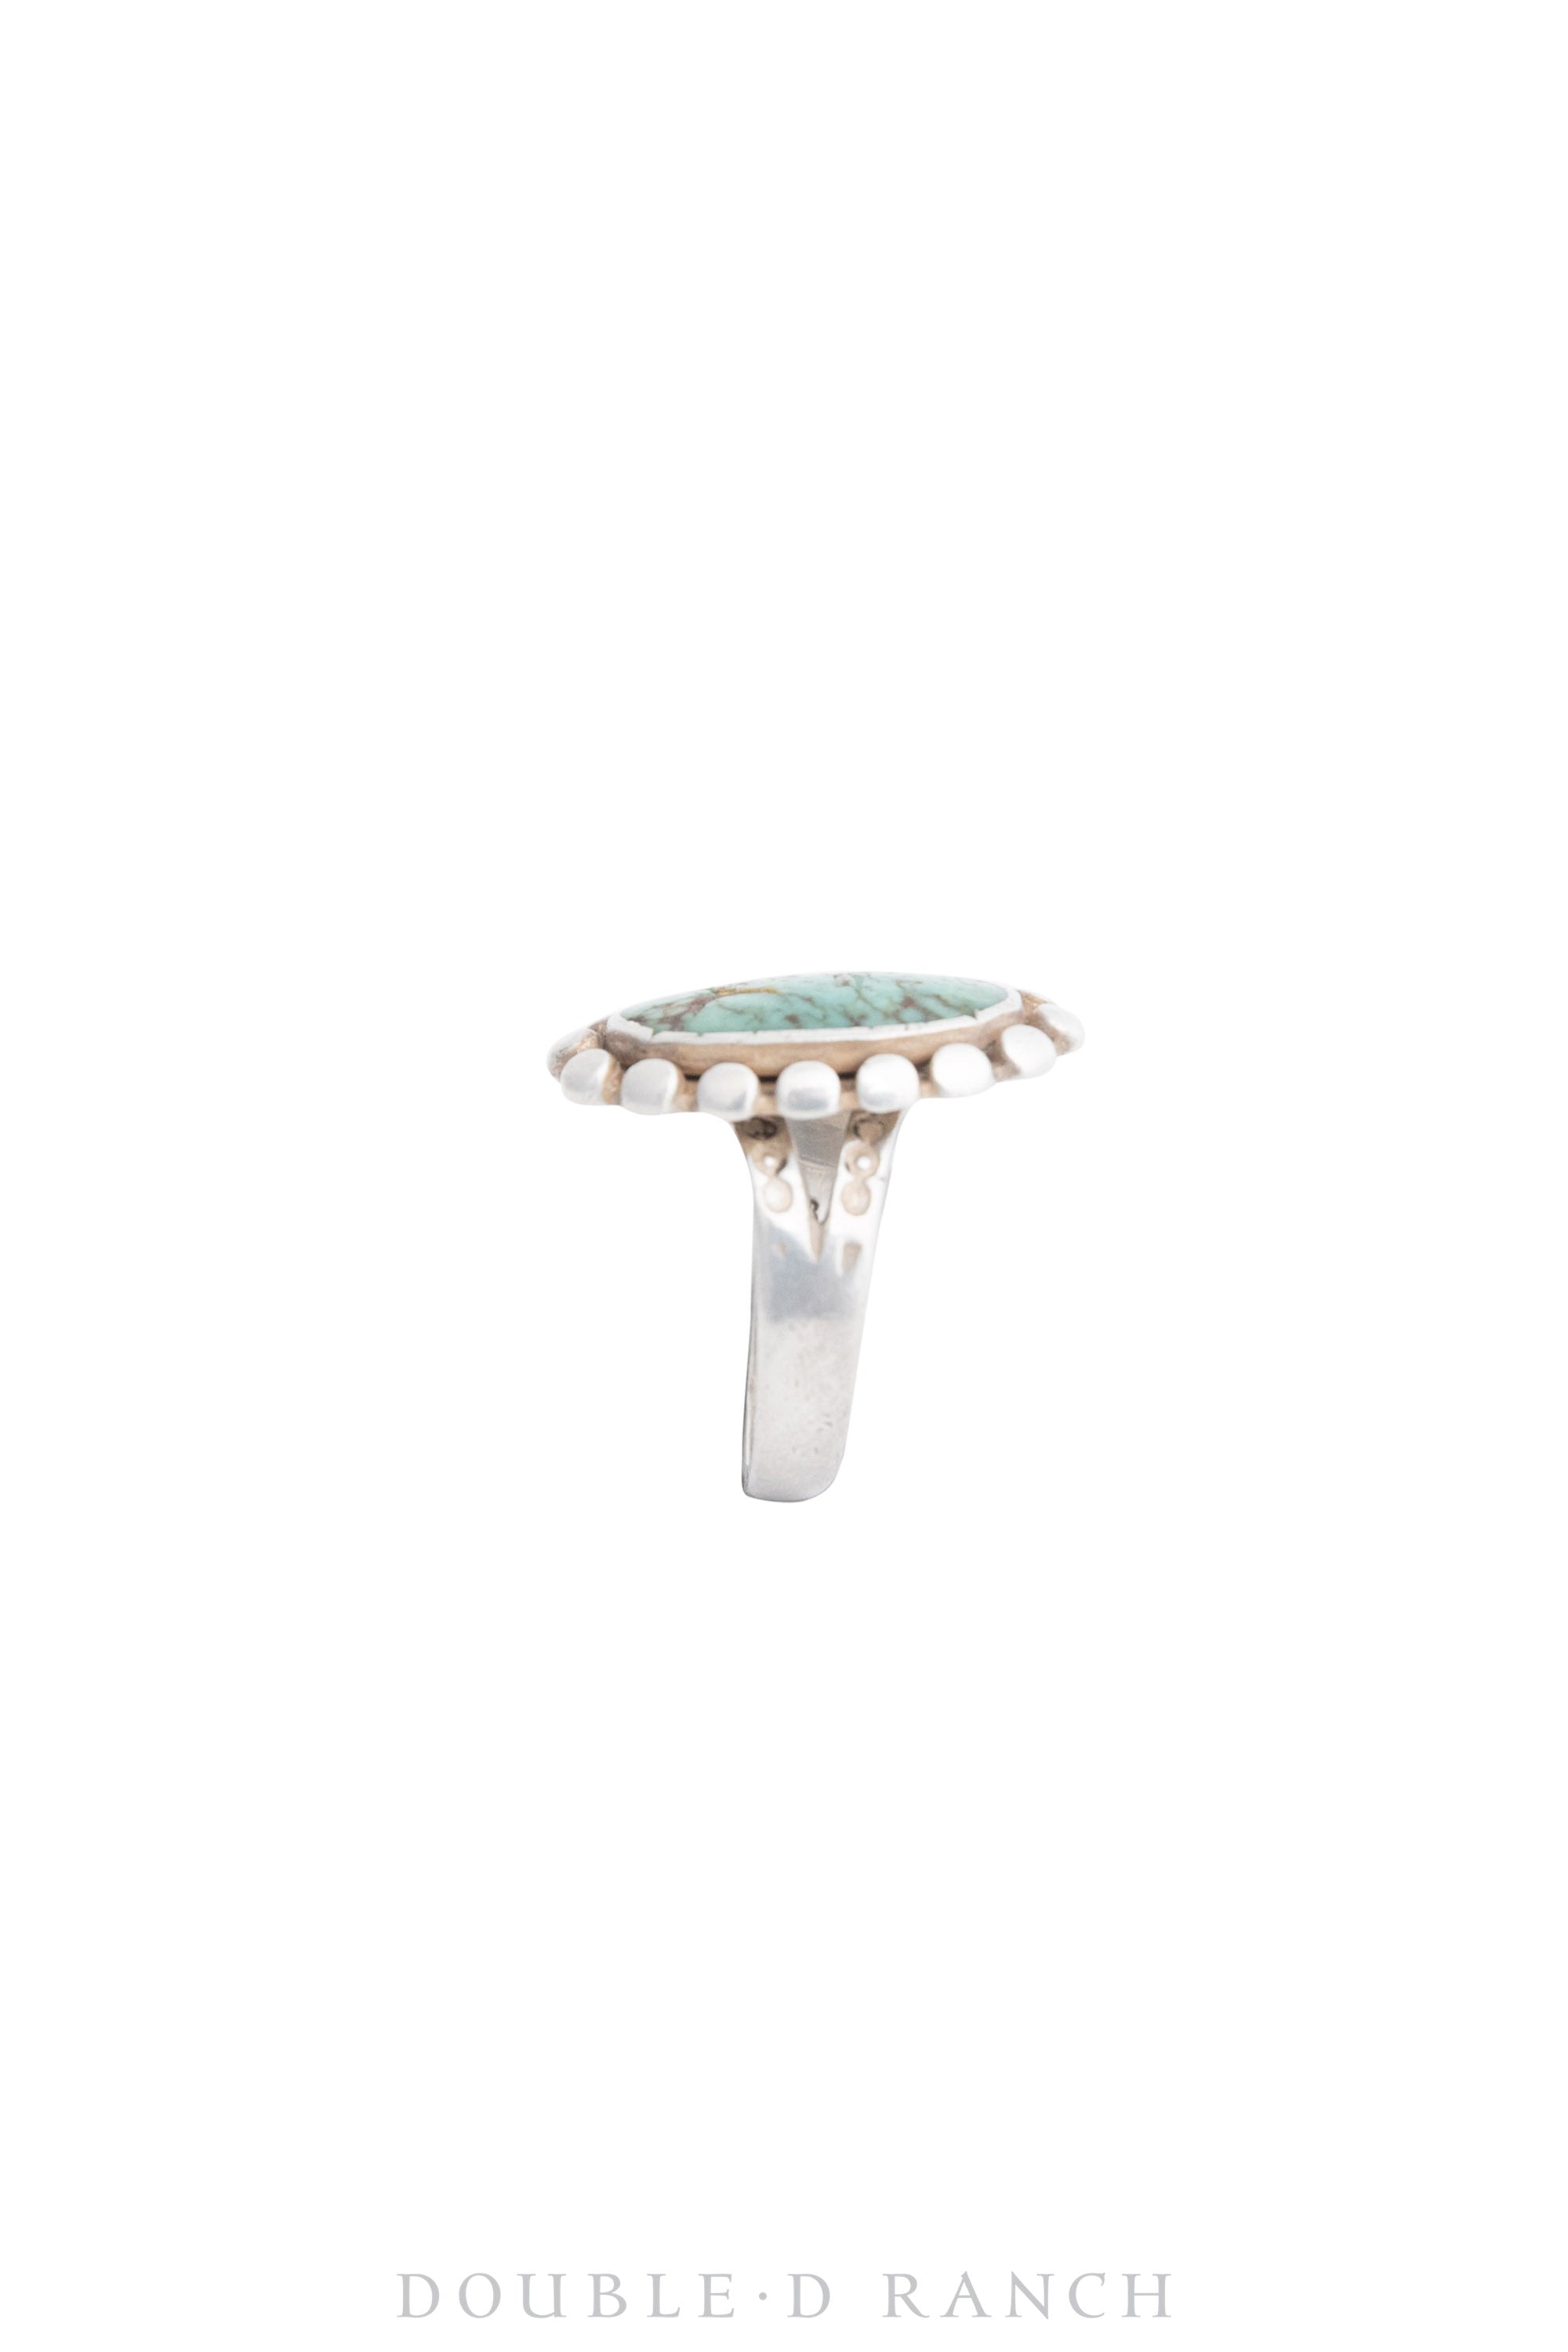 Ring, Natural Stone, Turquoise, Hallmark, Vintage, 1264